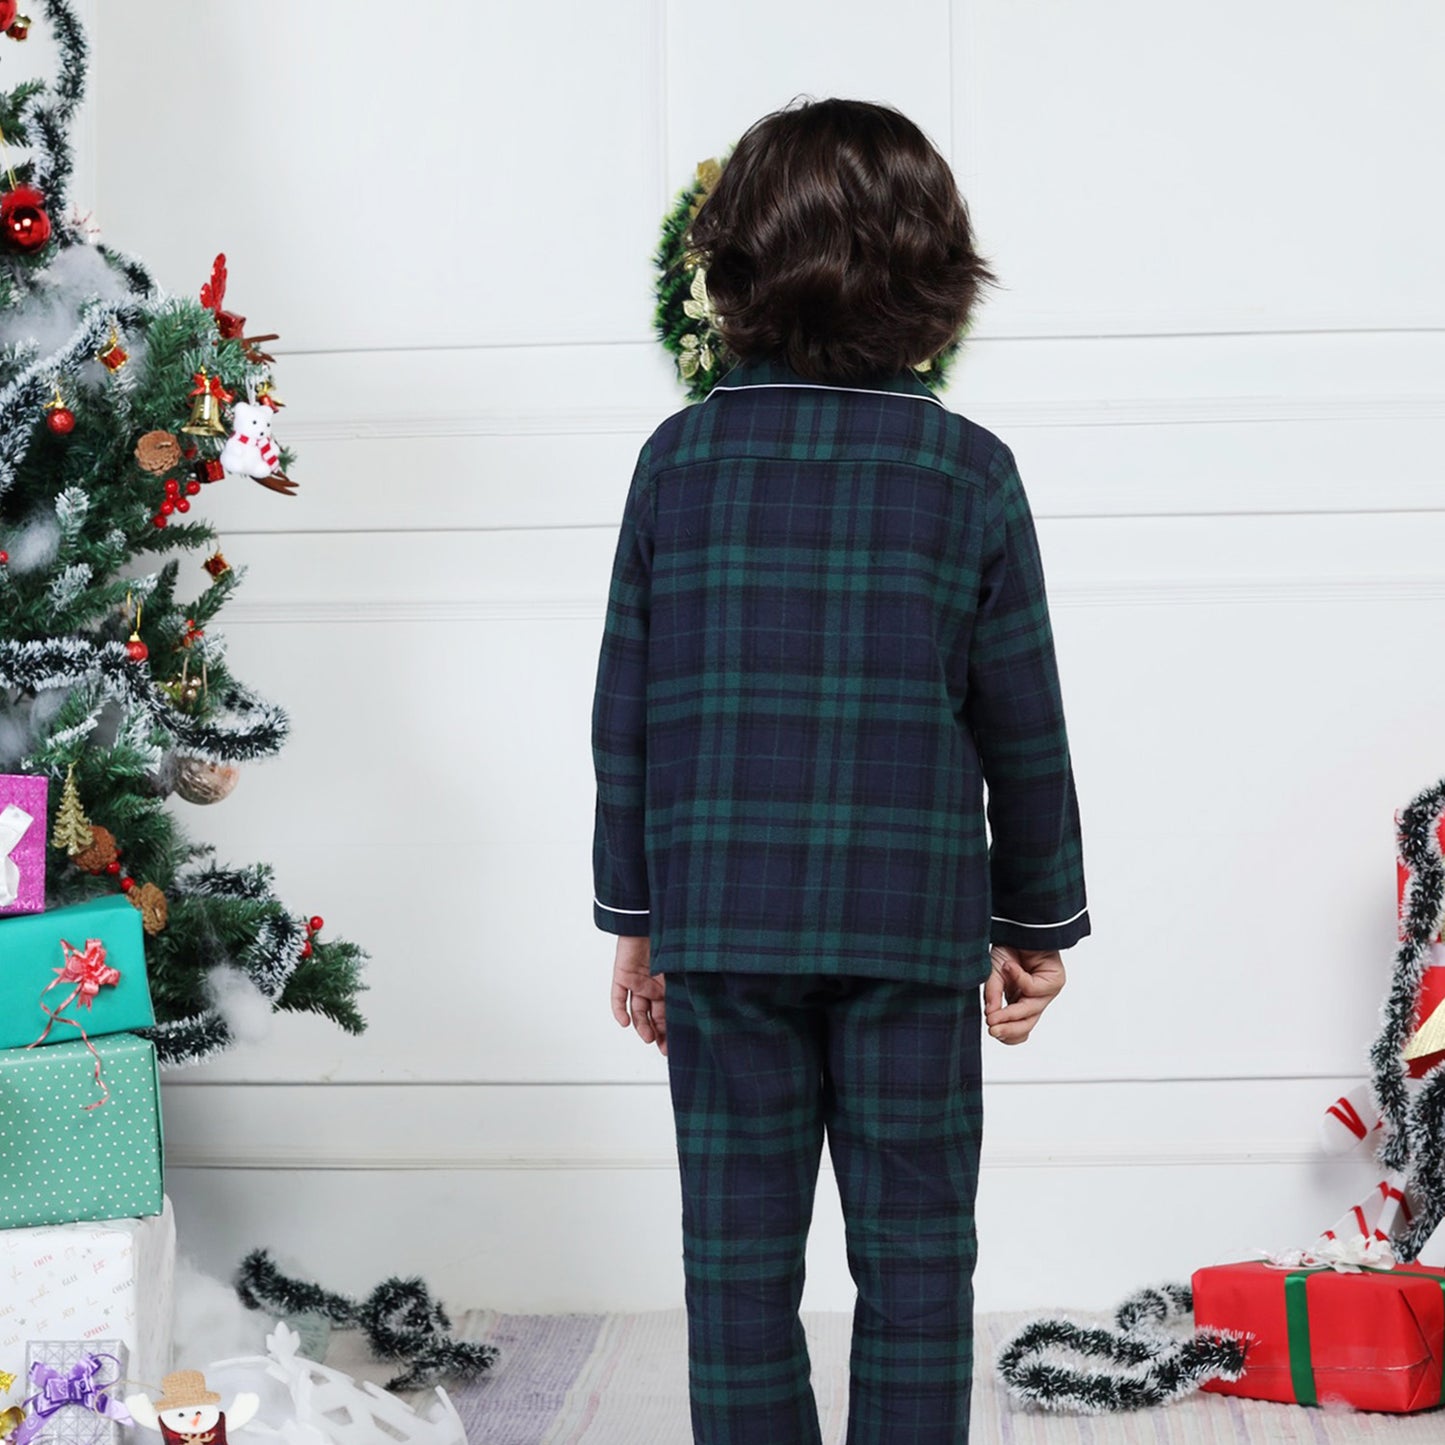 Classic Christmas Green Plaid PJ Set for Girls & Boys